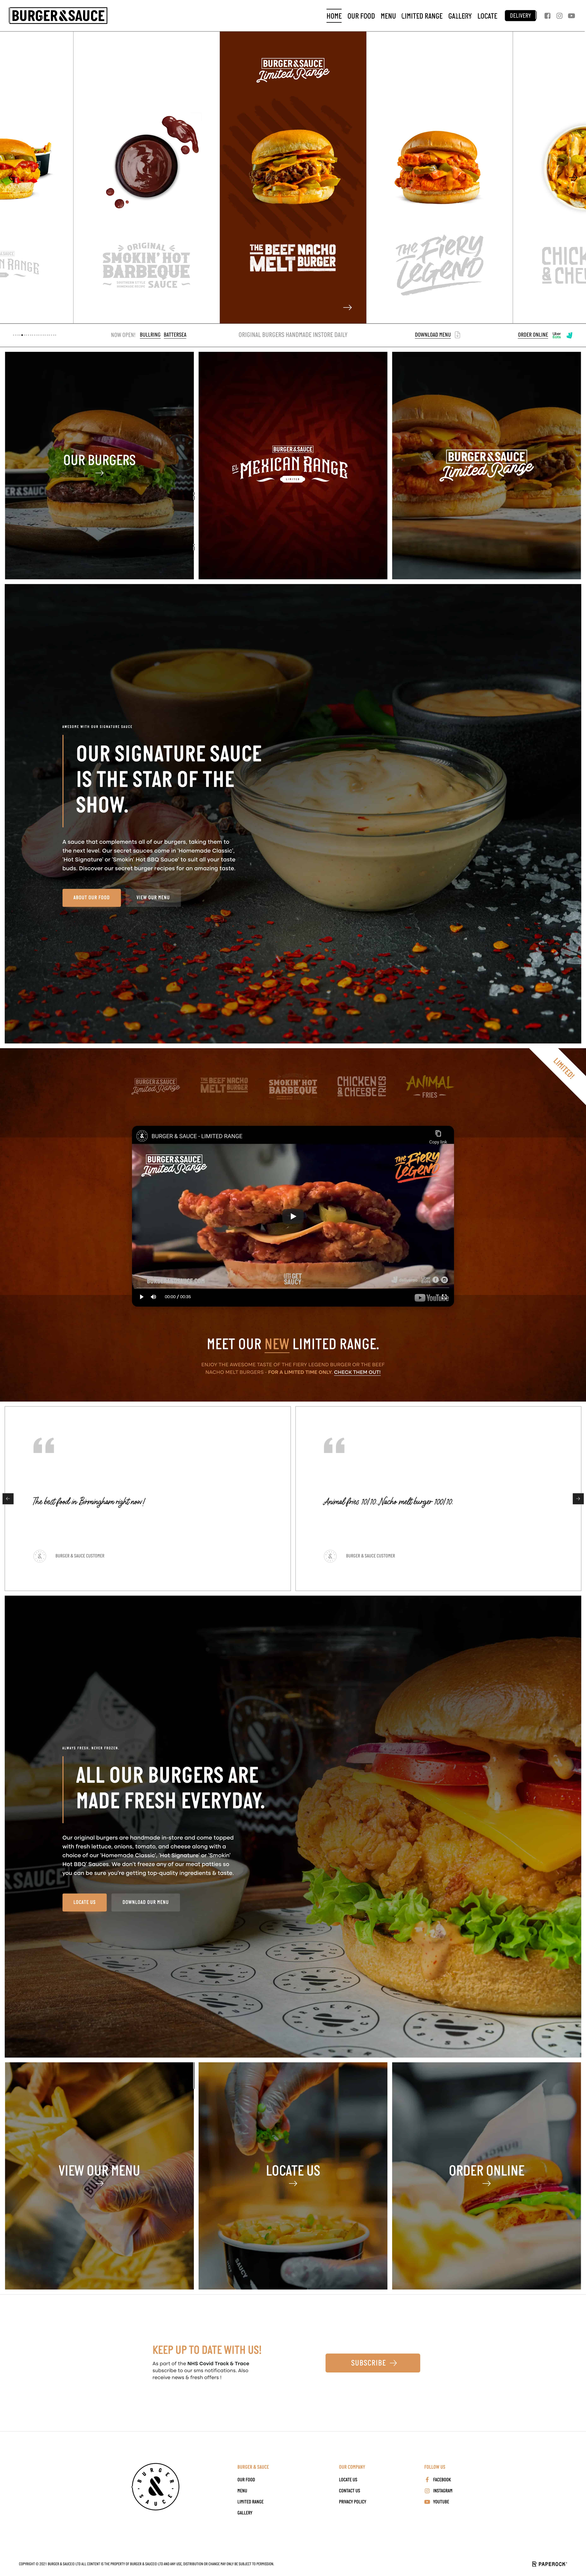 Burger and Sauce Website Design 2020